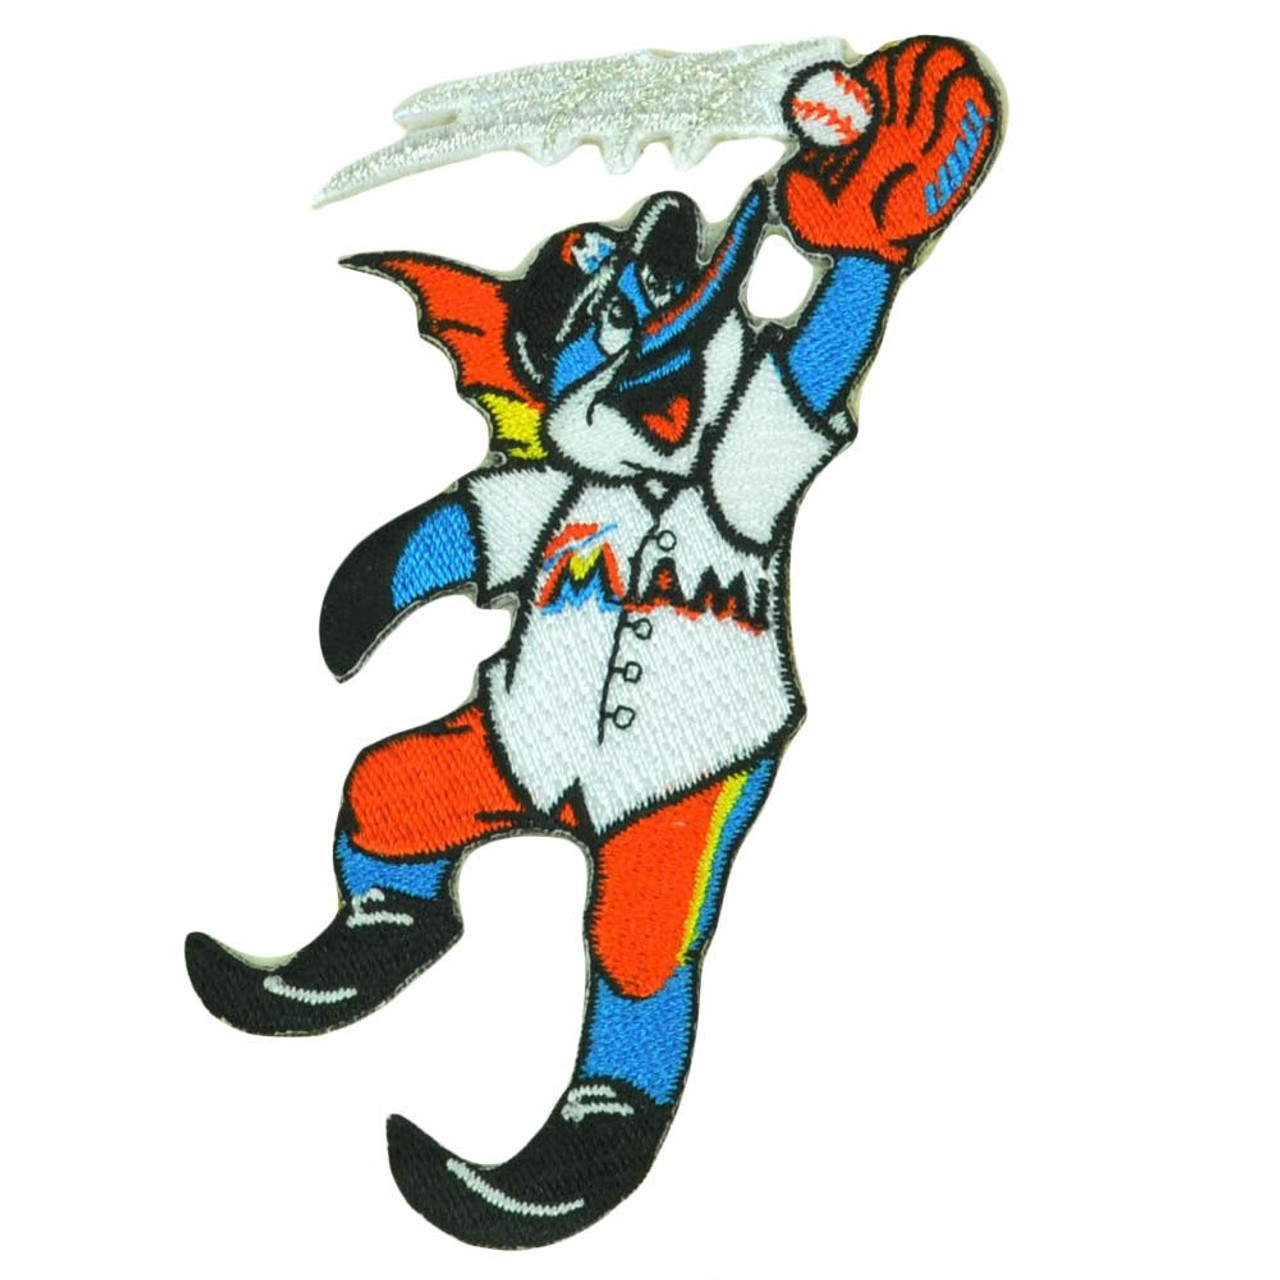 Pop! Mlb Mascots: Billy The Marlin-miami Marlins